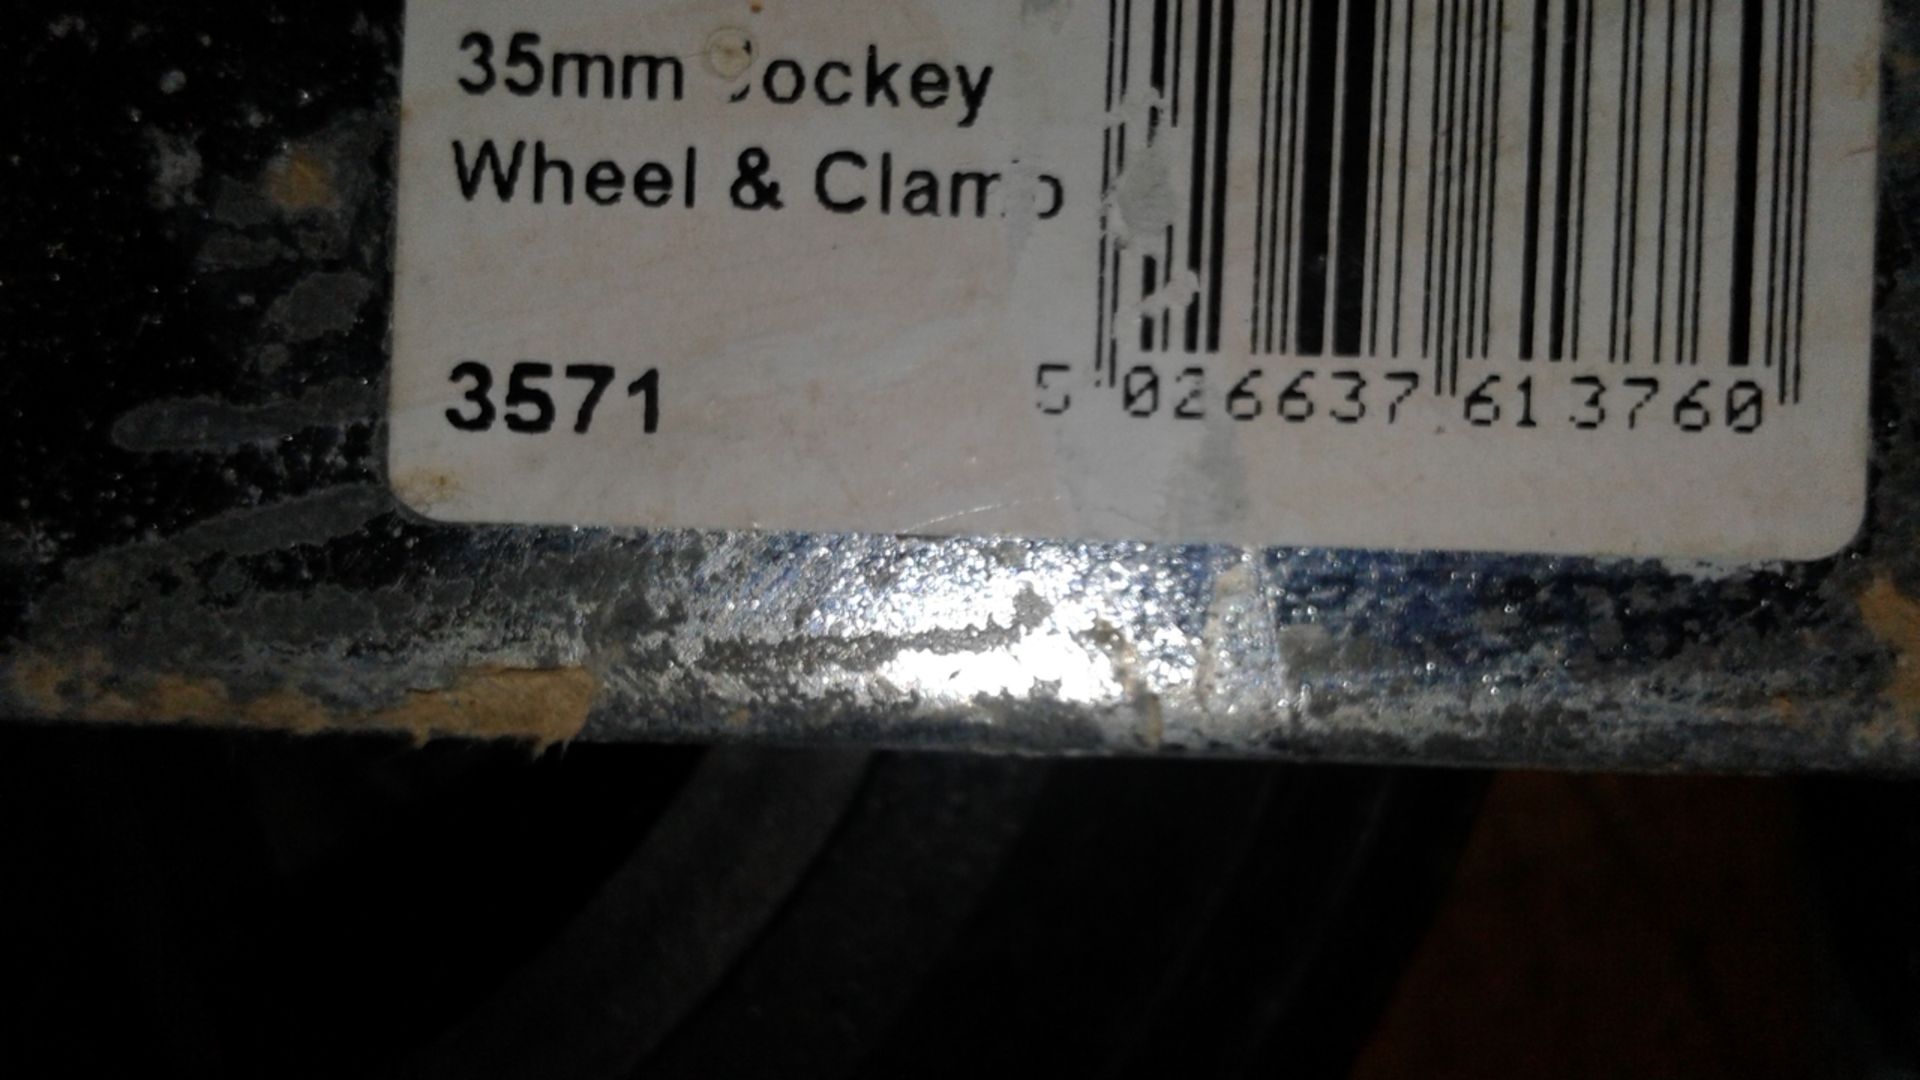 New & unused Jockey wheel 35mm with clamp - - Image 2 of 3